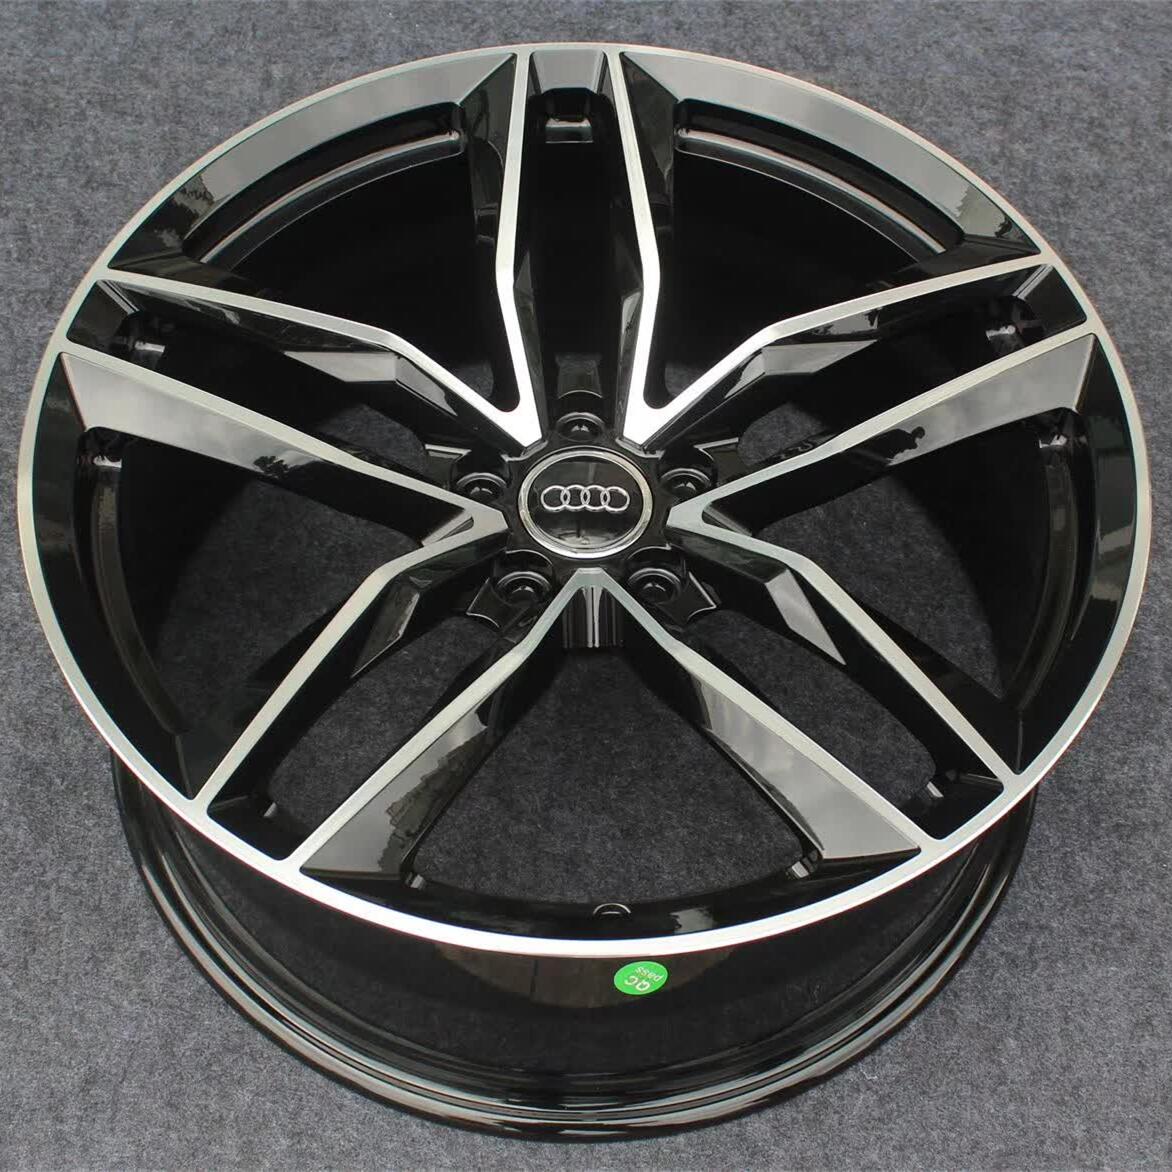 AUDI A7 21 inch wheels